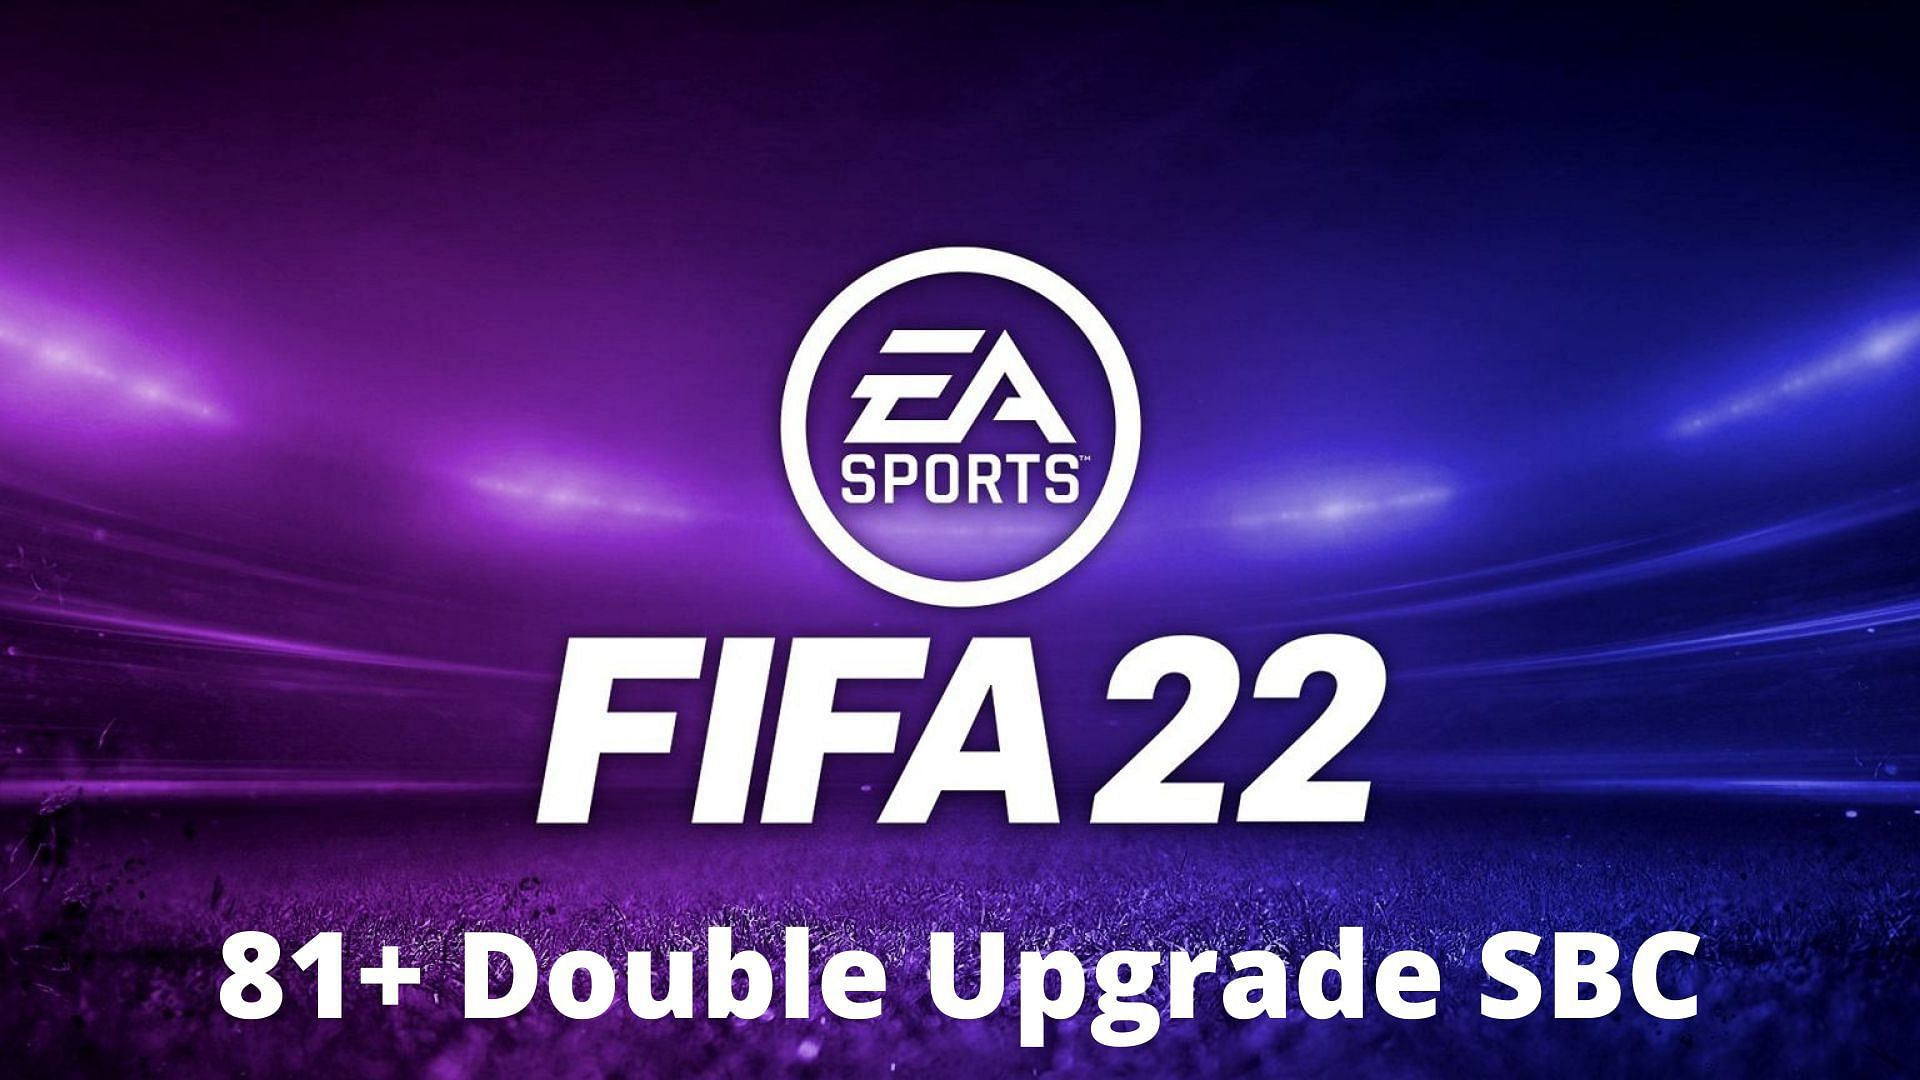 81+ Double Upgrade is live in FIFA 22 (Image via Sportskeeda)